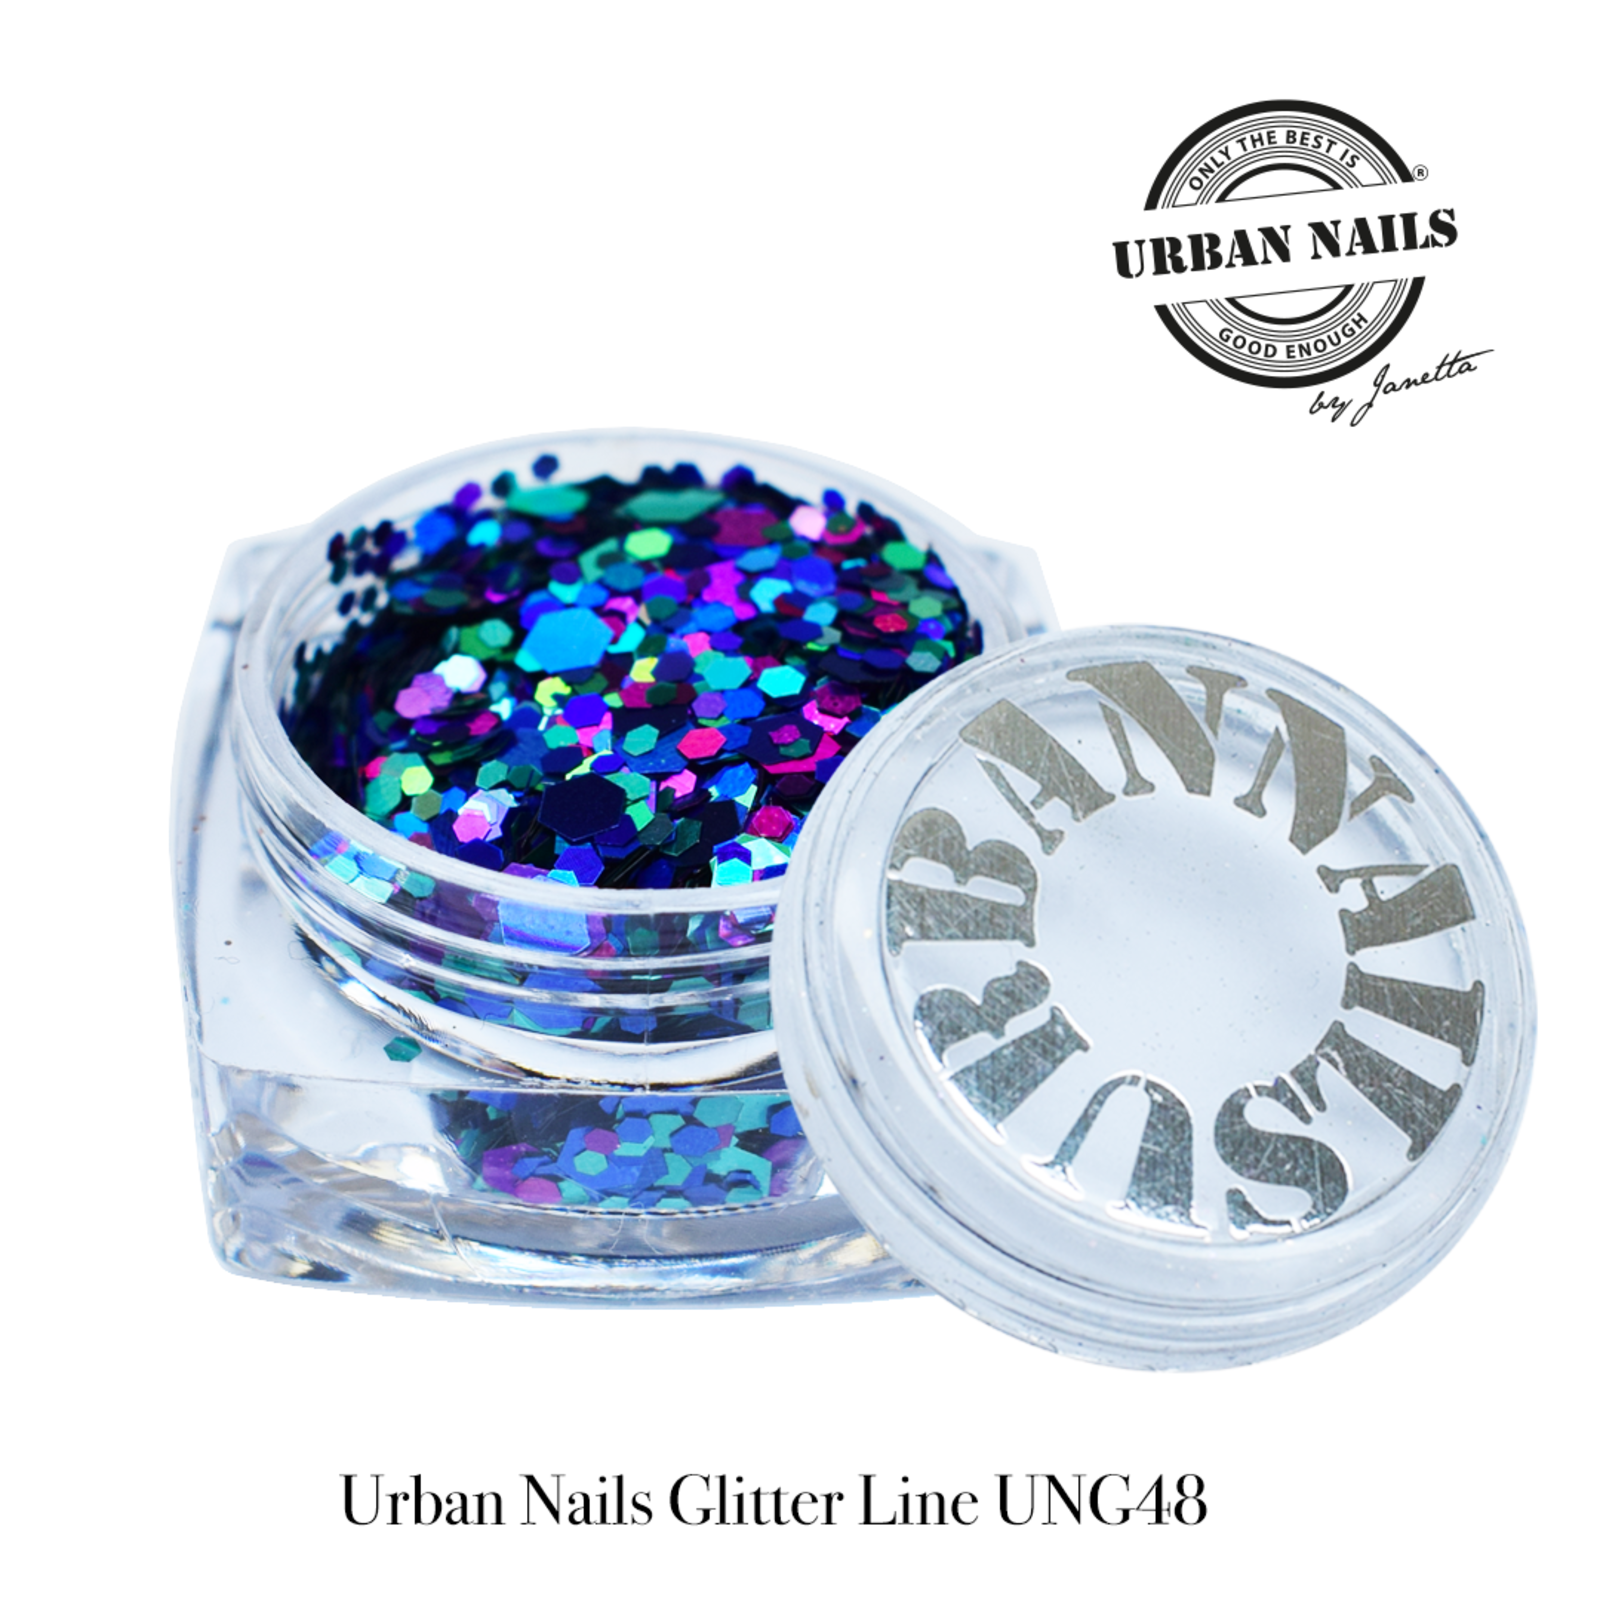 Urban nails Glitter Line UNG48